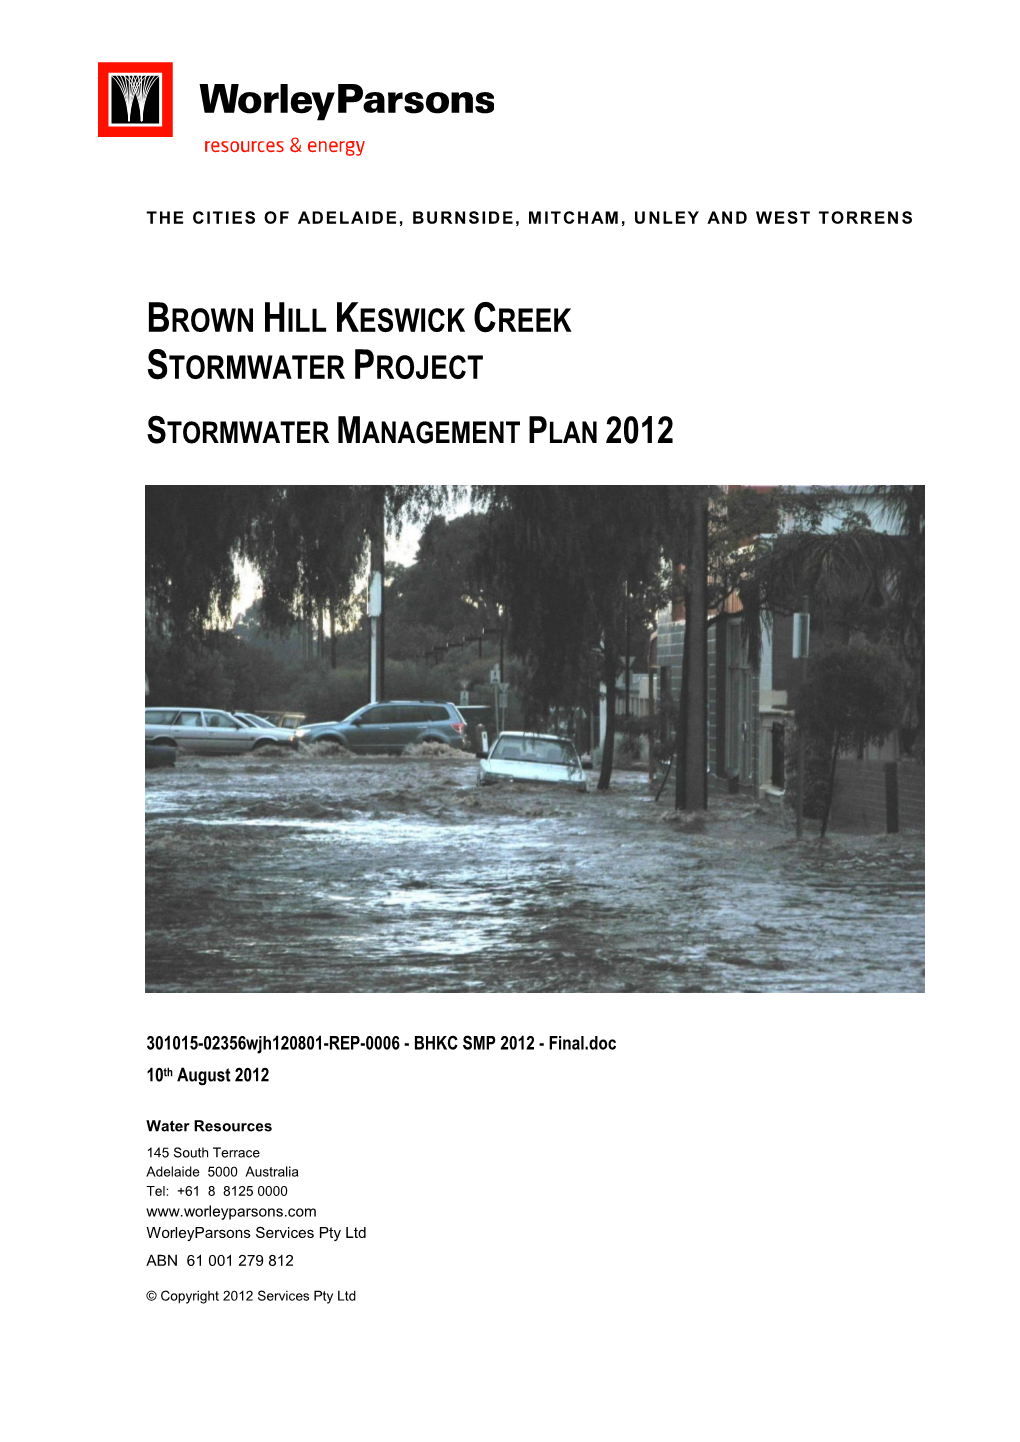 Stormwater Management Plan 2012